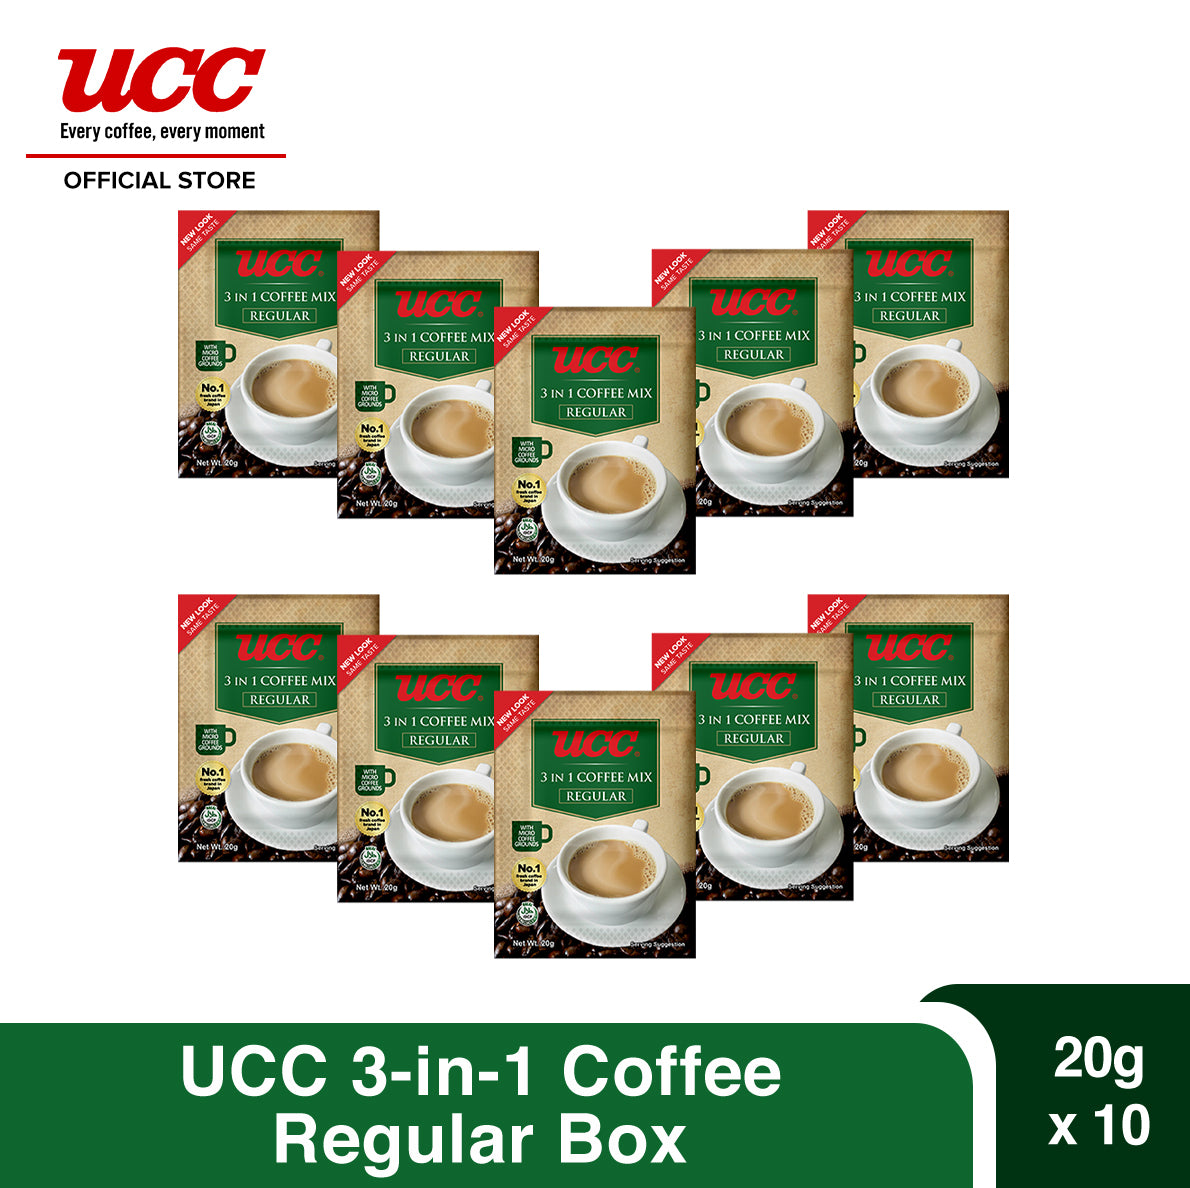 UCC 3-in-1 Coffee Regular Box (20g x 10)